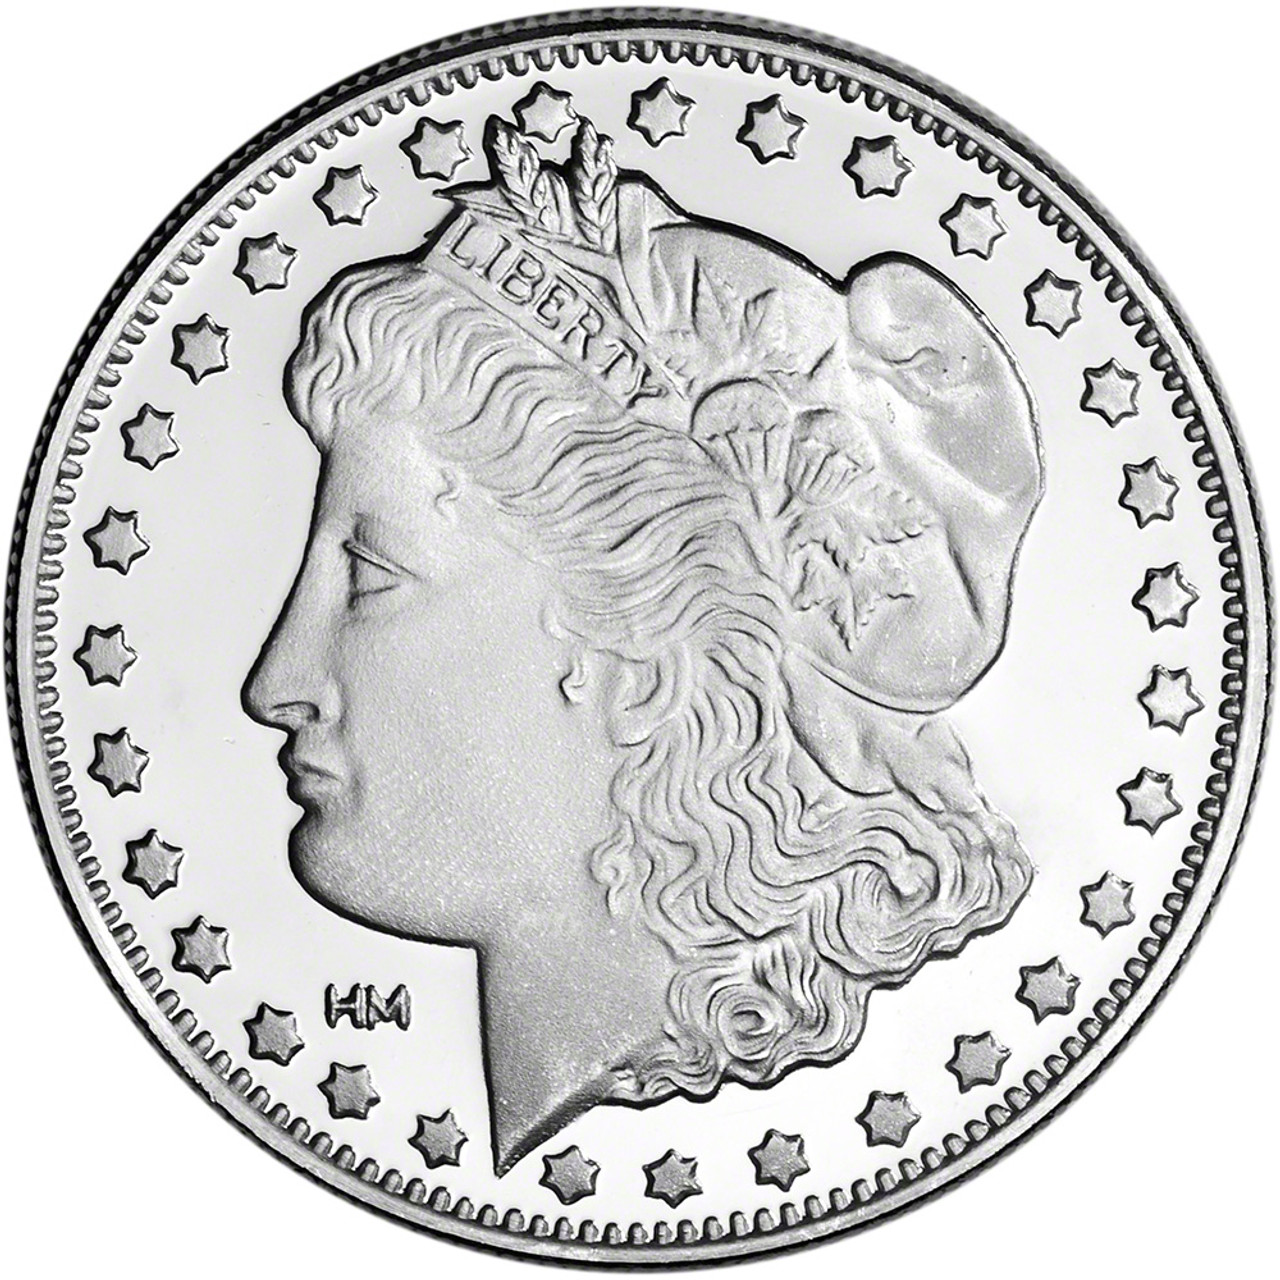 1 oz. Highland Mint Silver Round - Morgan Dollar Design .999 Fine